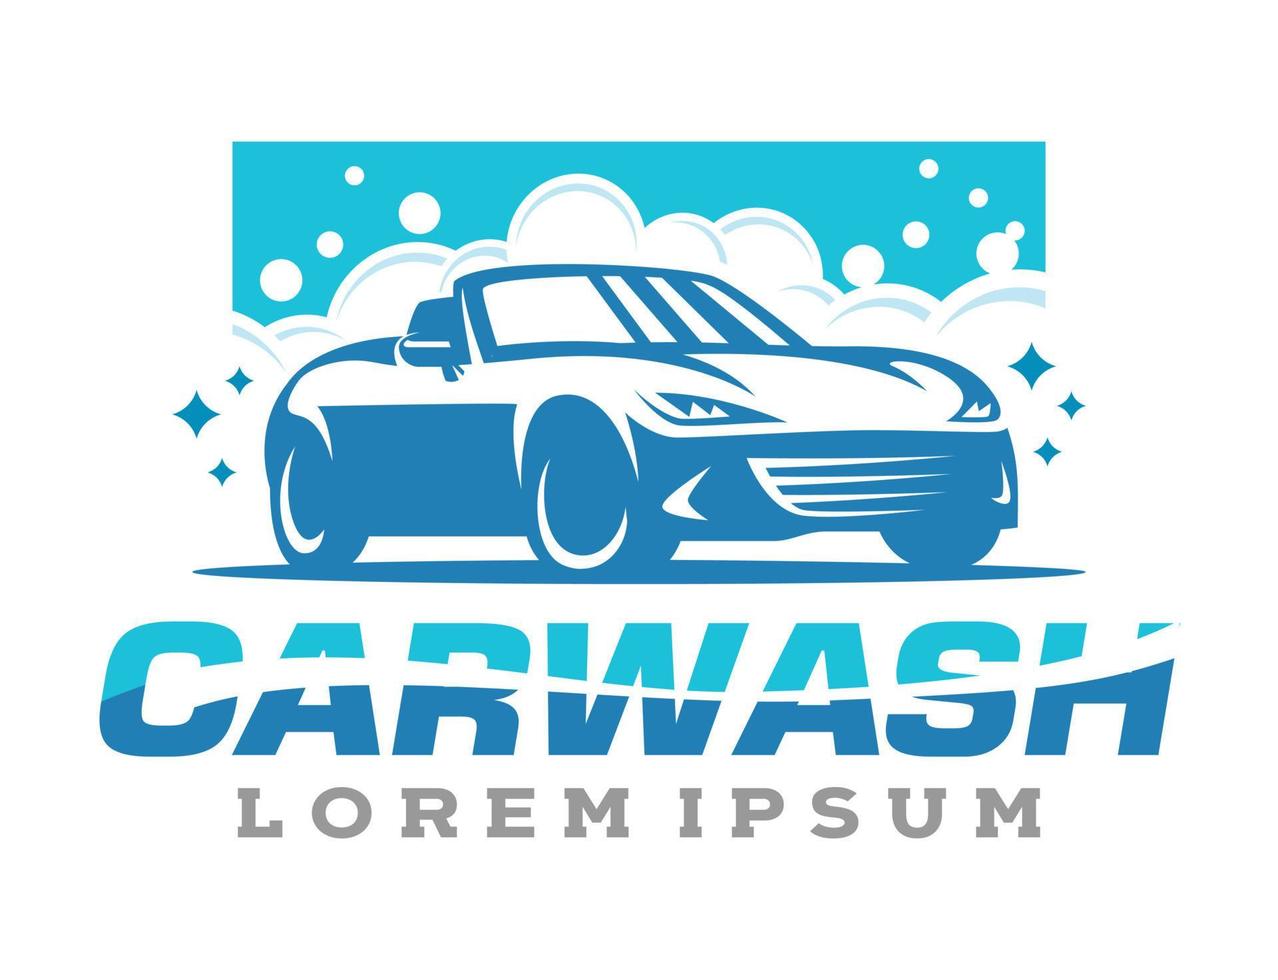 car wash logo afbeelding vector